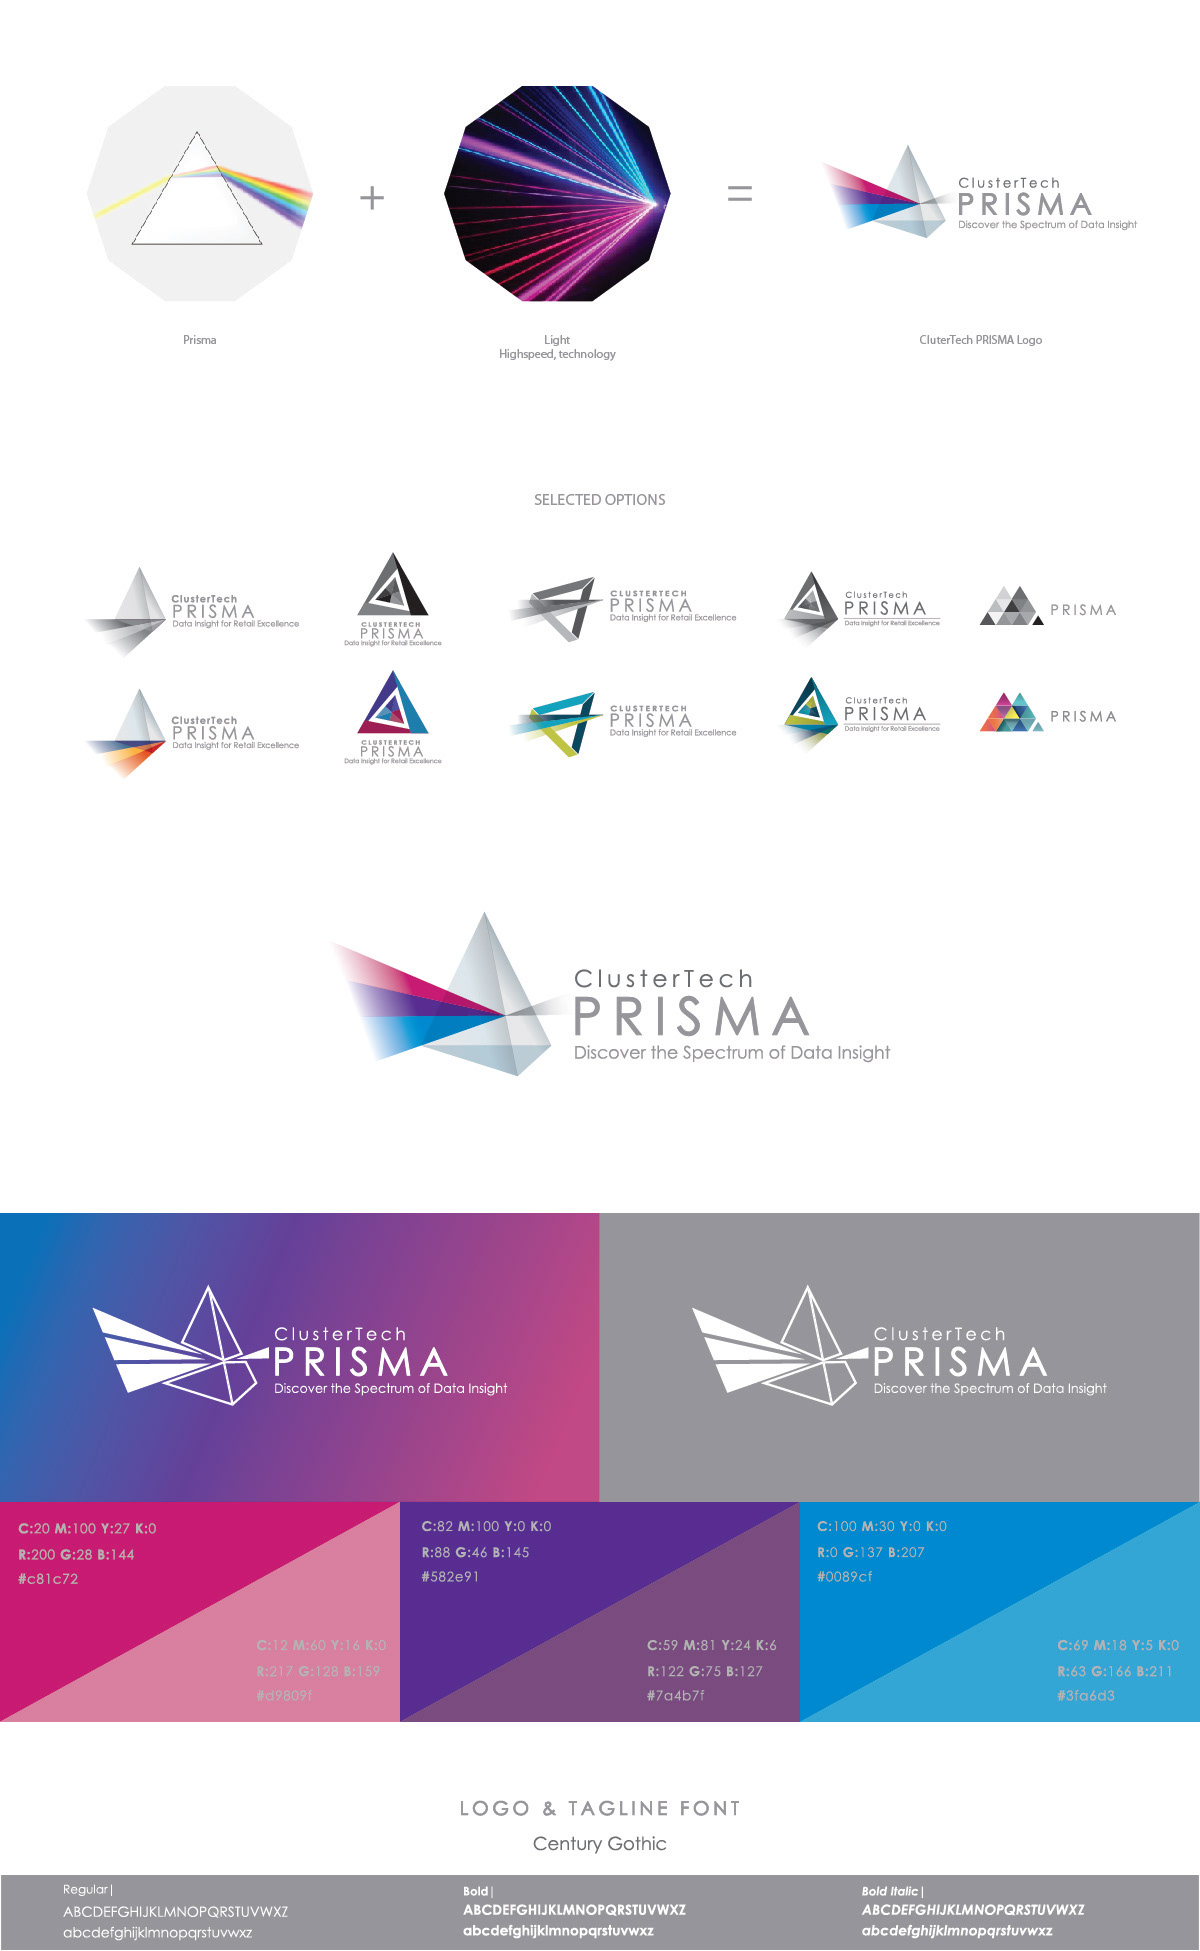 wwwingman design - PRISMA